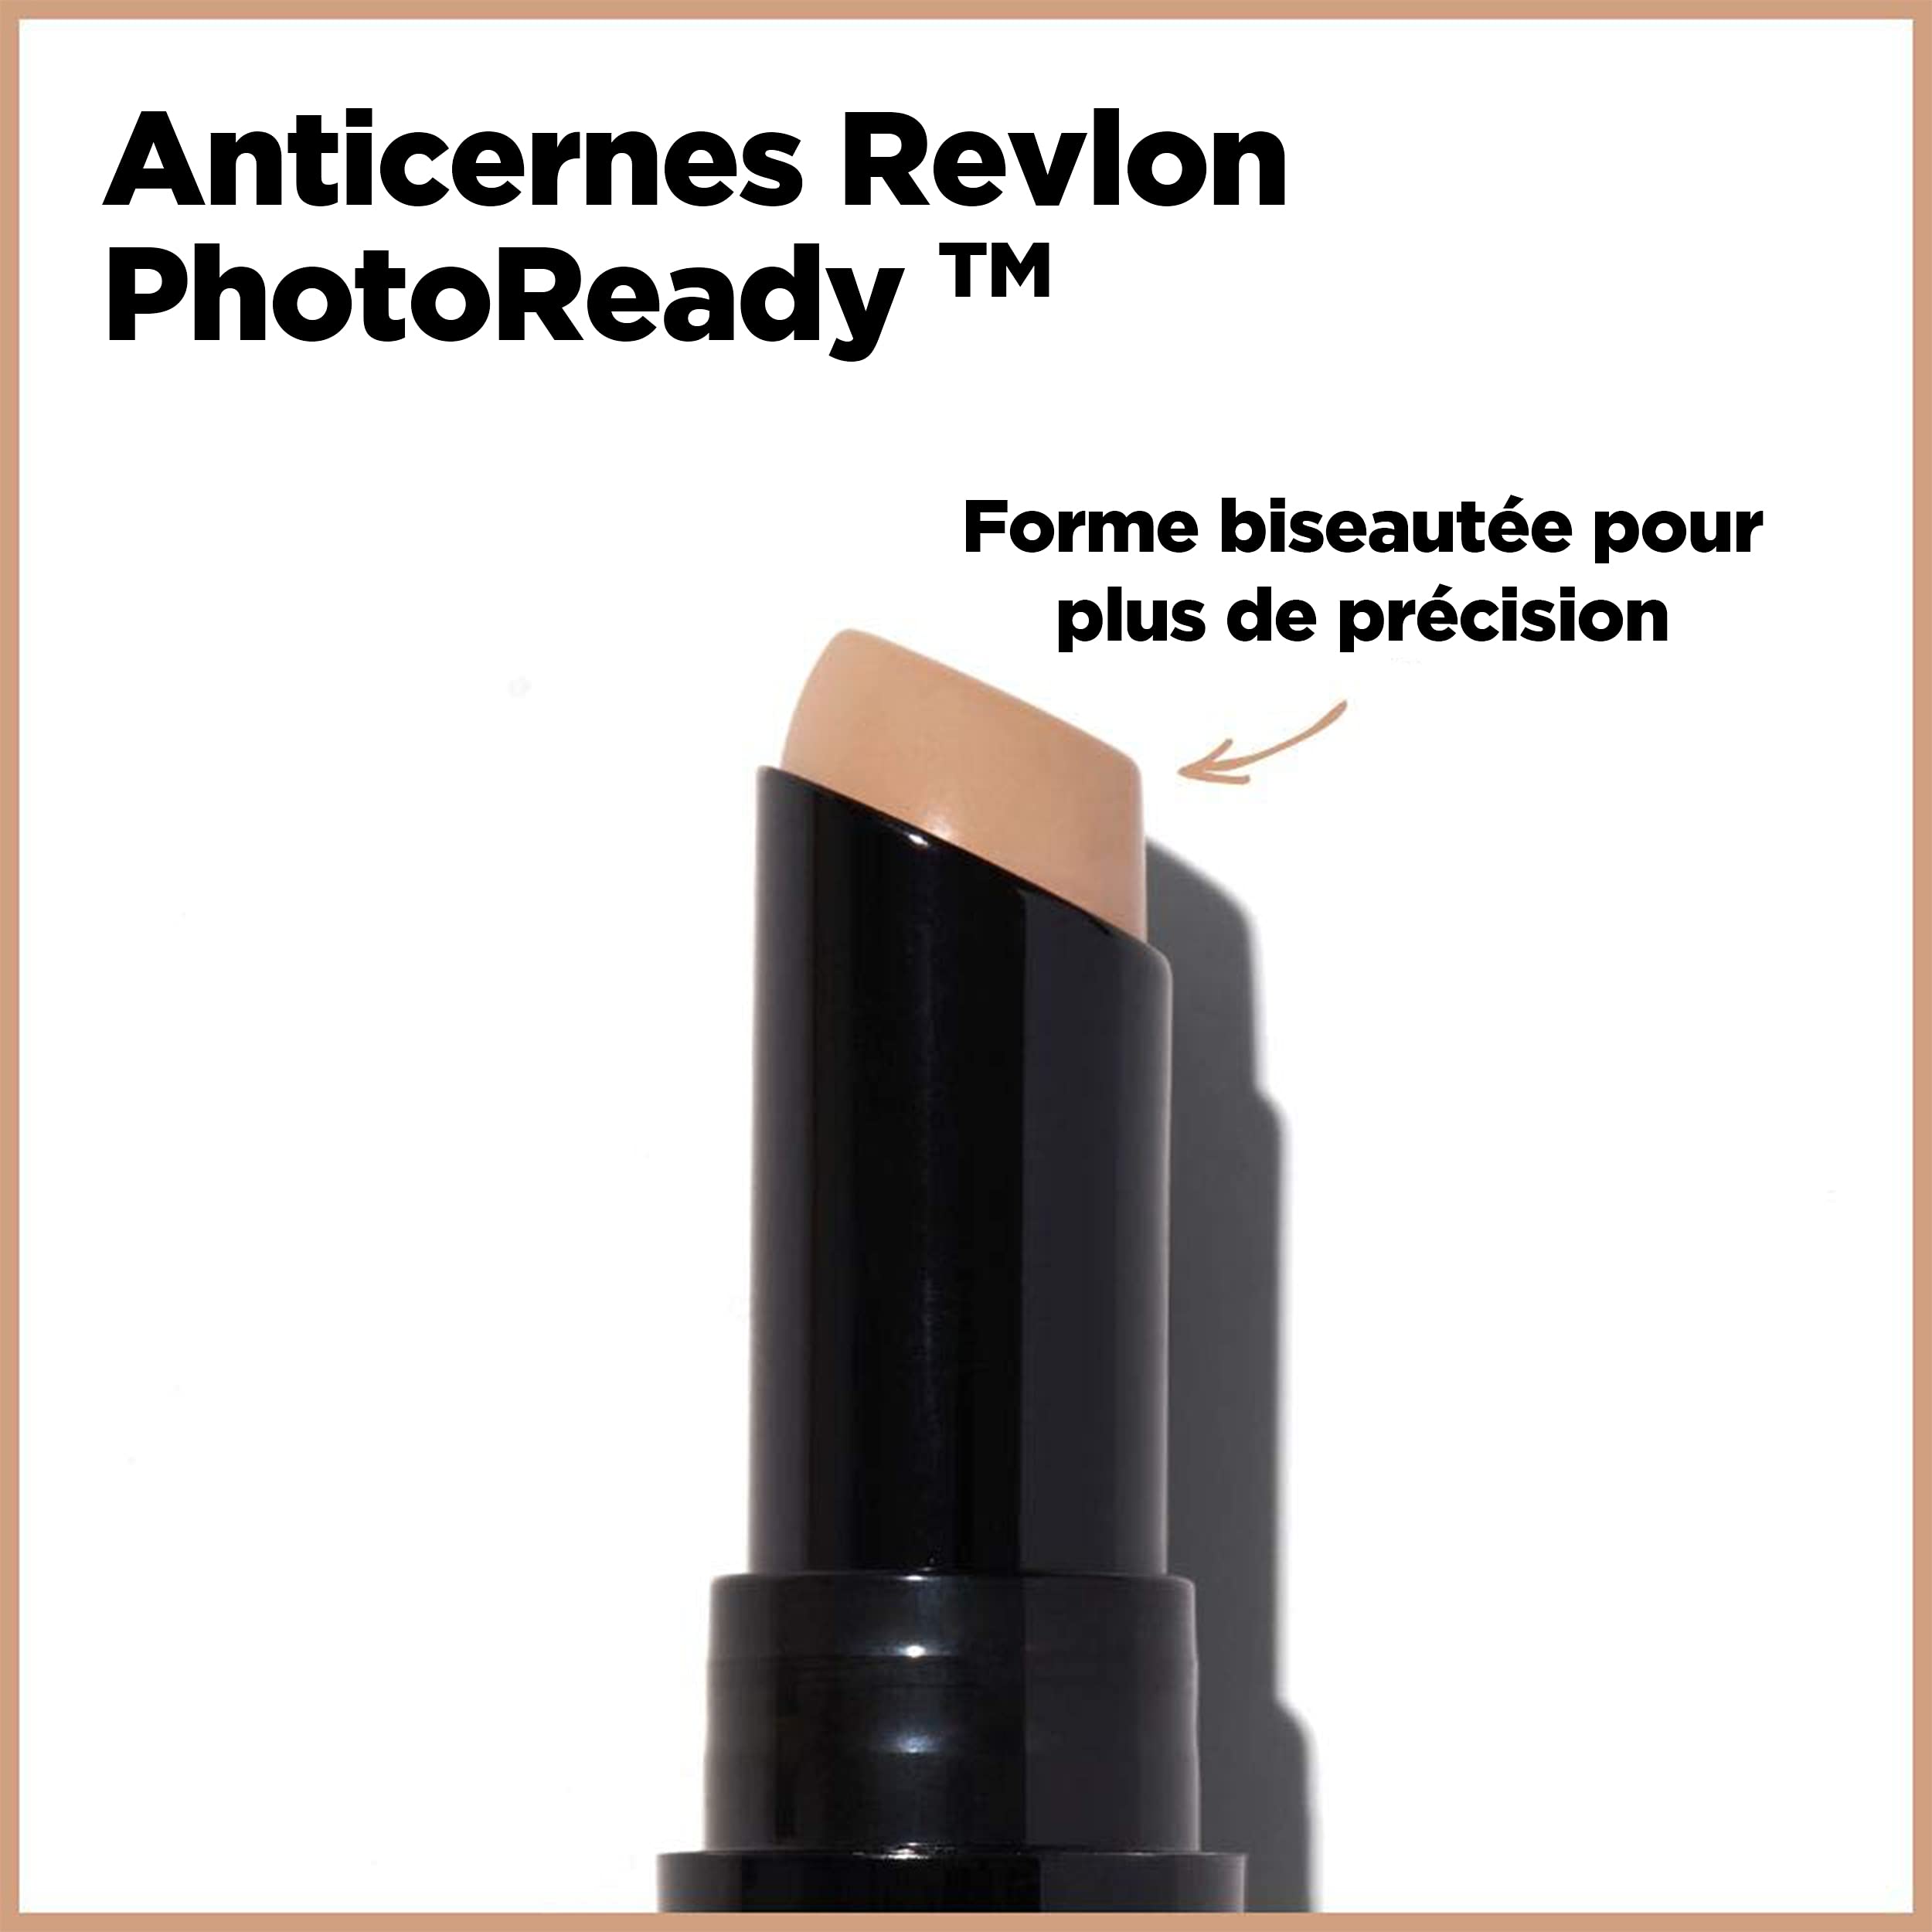 Revlon Concealer Stick, PhotoReady Face Makeup for All Skin Types, Longwear Medium- Full Coverage with Creamy Finish, Lightweight Formula, 004 Medium, 0.11 Oz